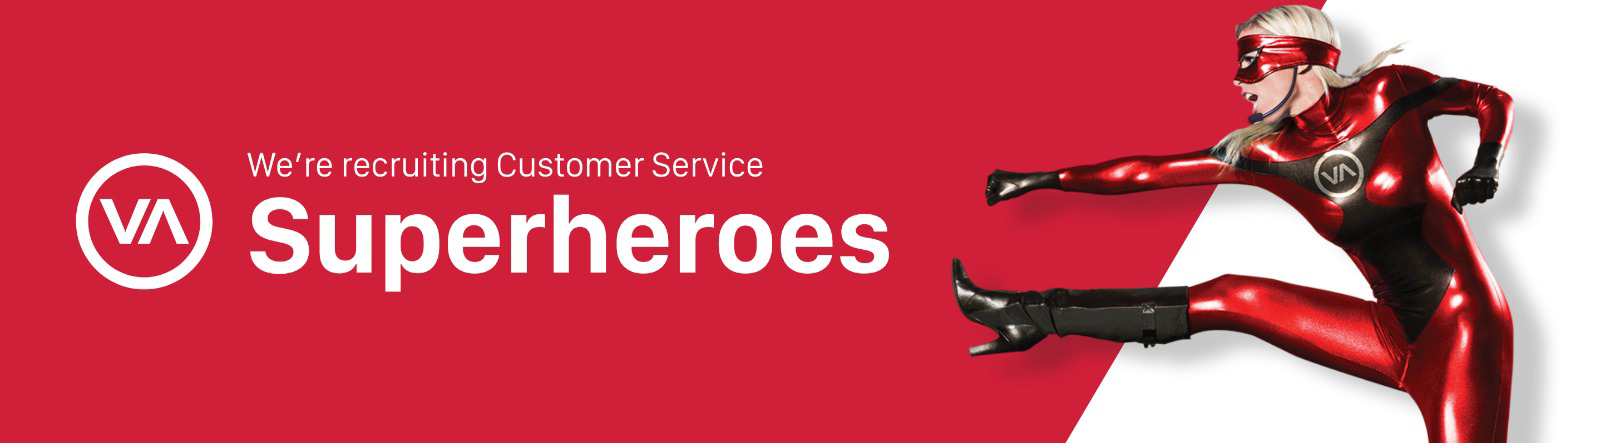 Ventrica.customer.service.superheroes